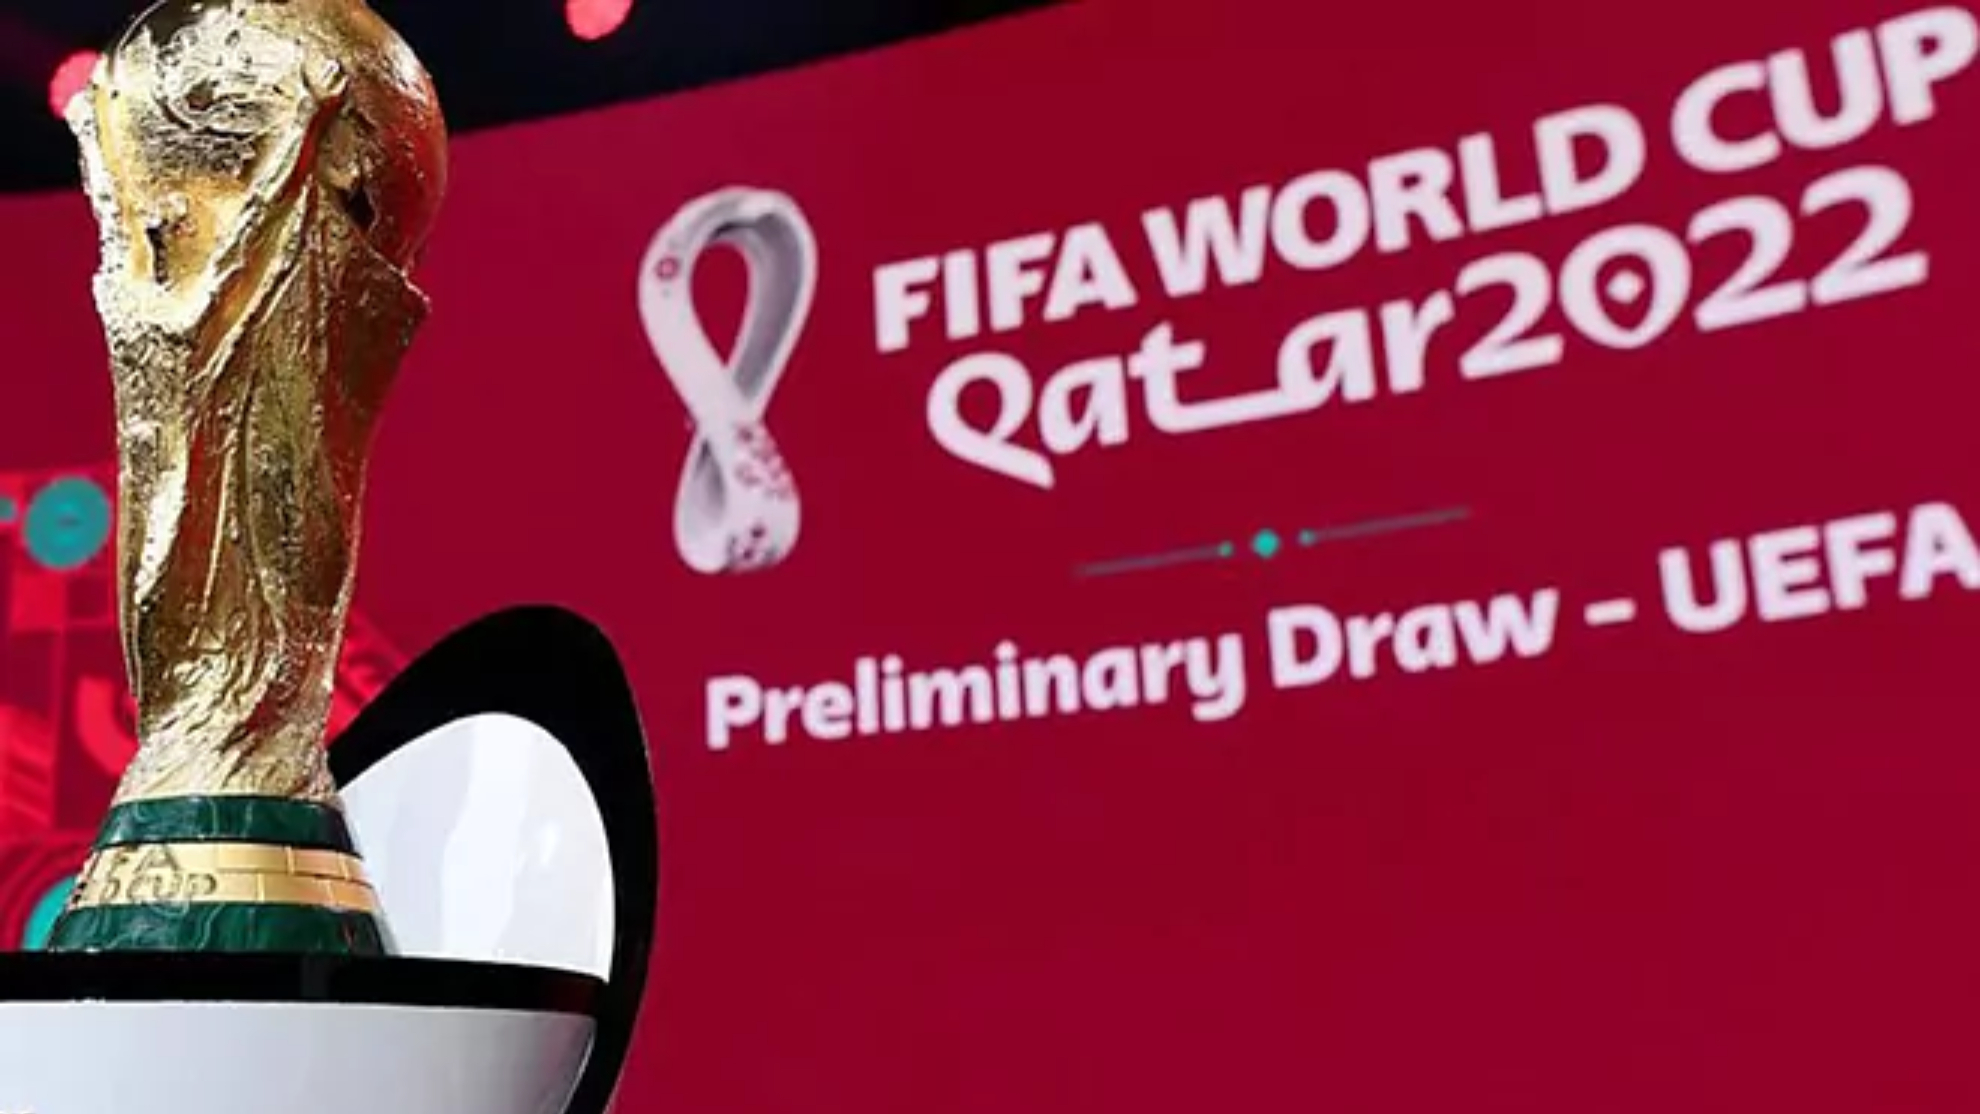 ¿Quién va a transmitir el Mundial Qatar 2022 Colombia?